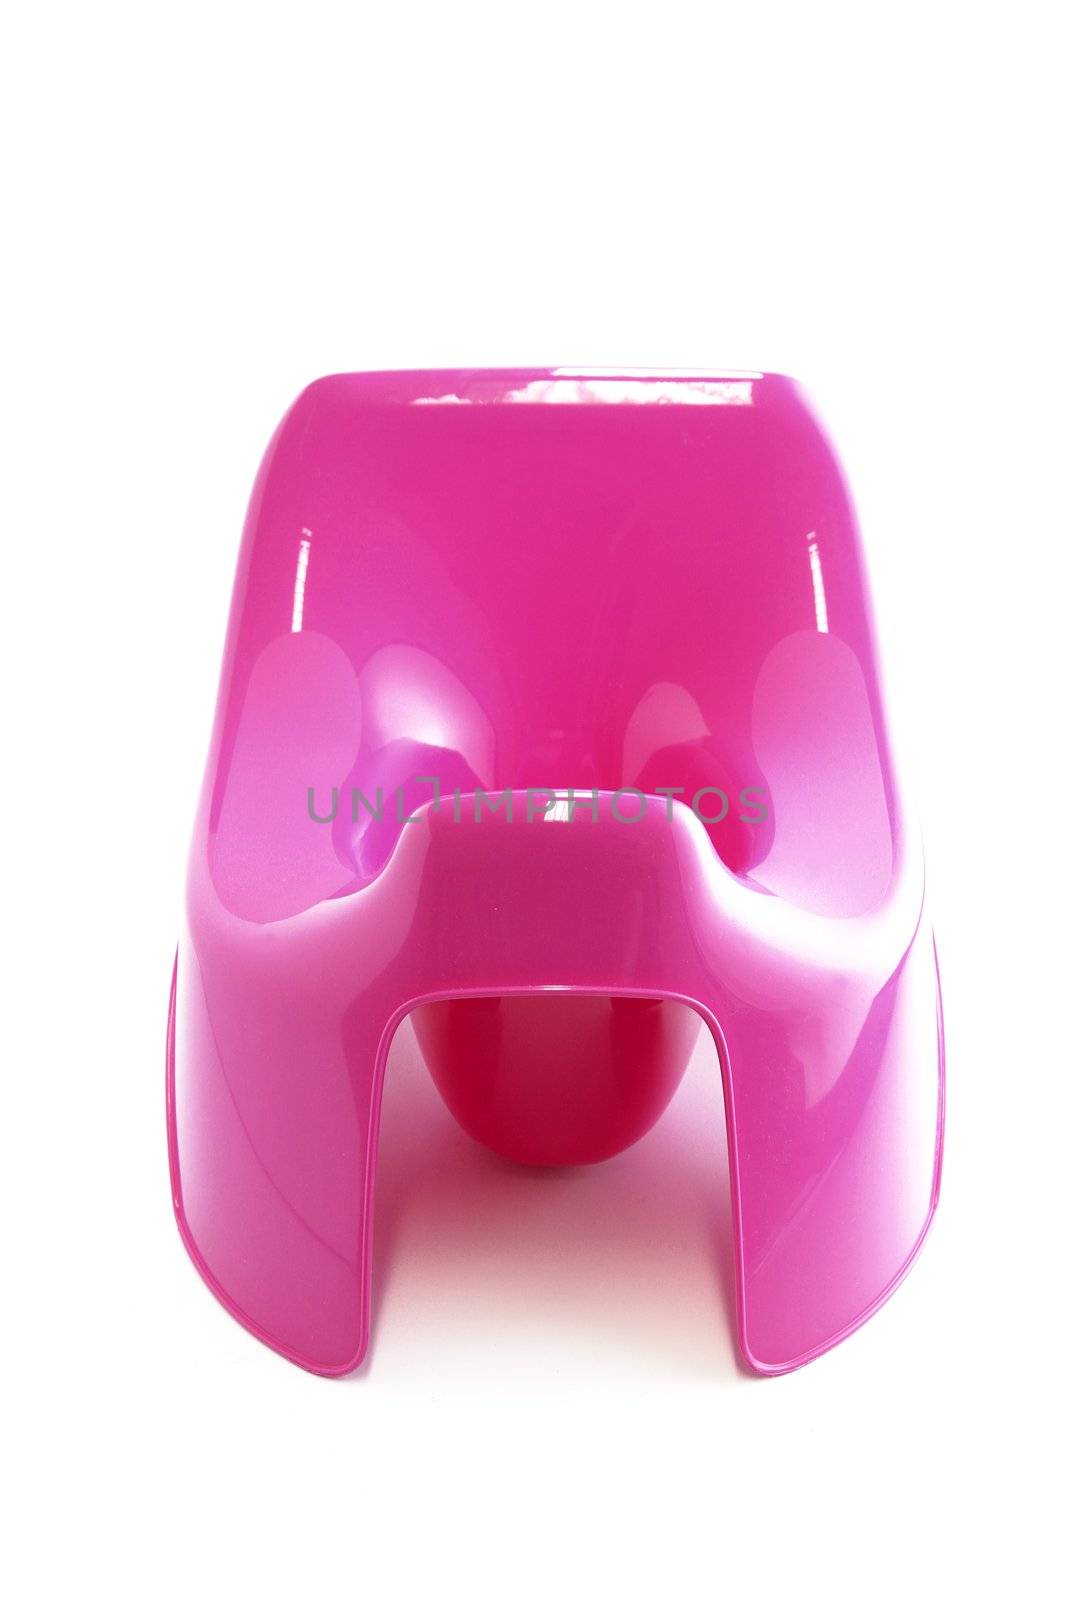 Pink plastic potty by phovoir